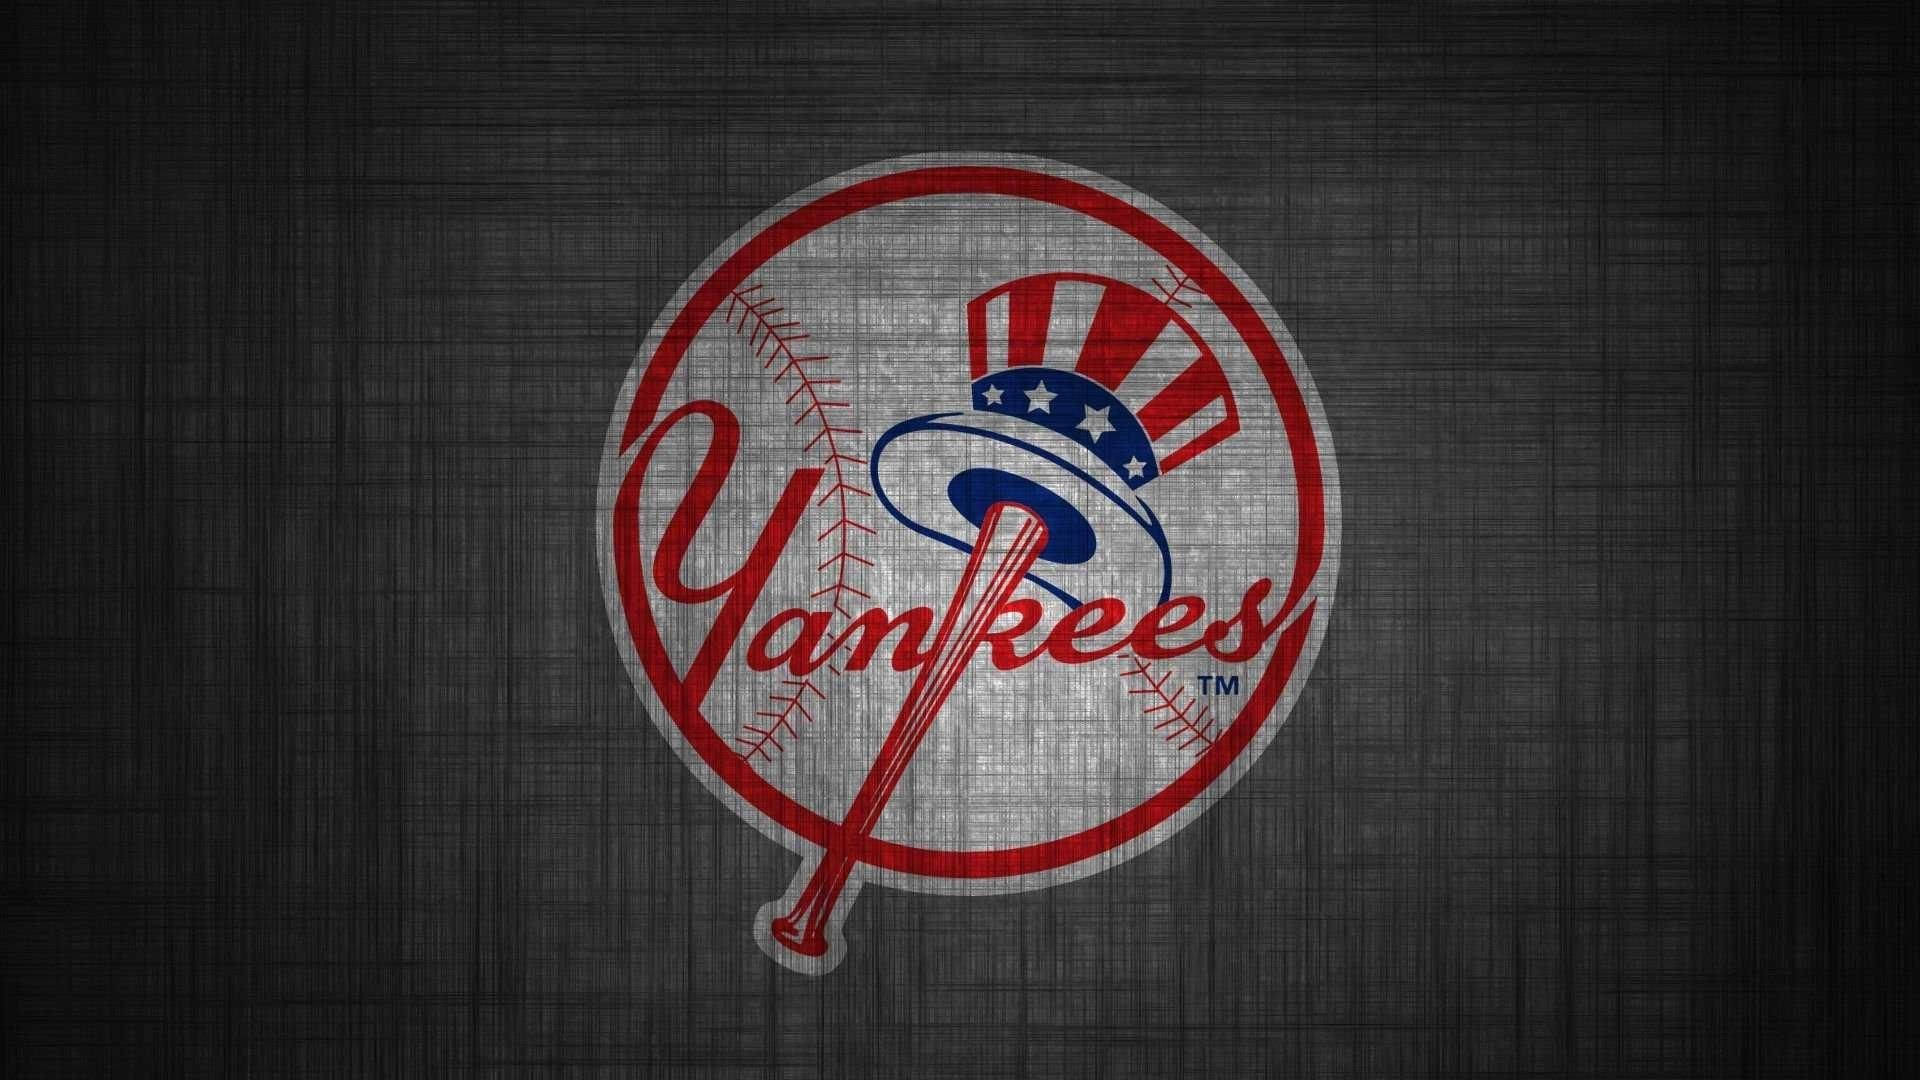 New York Yankees Computer Background. New